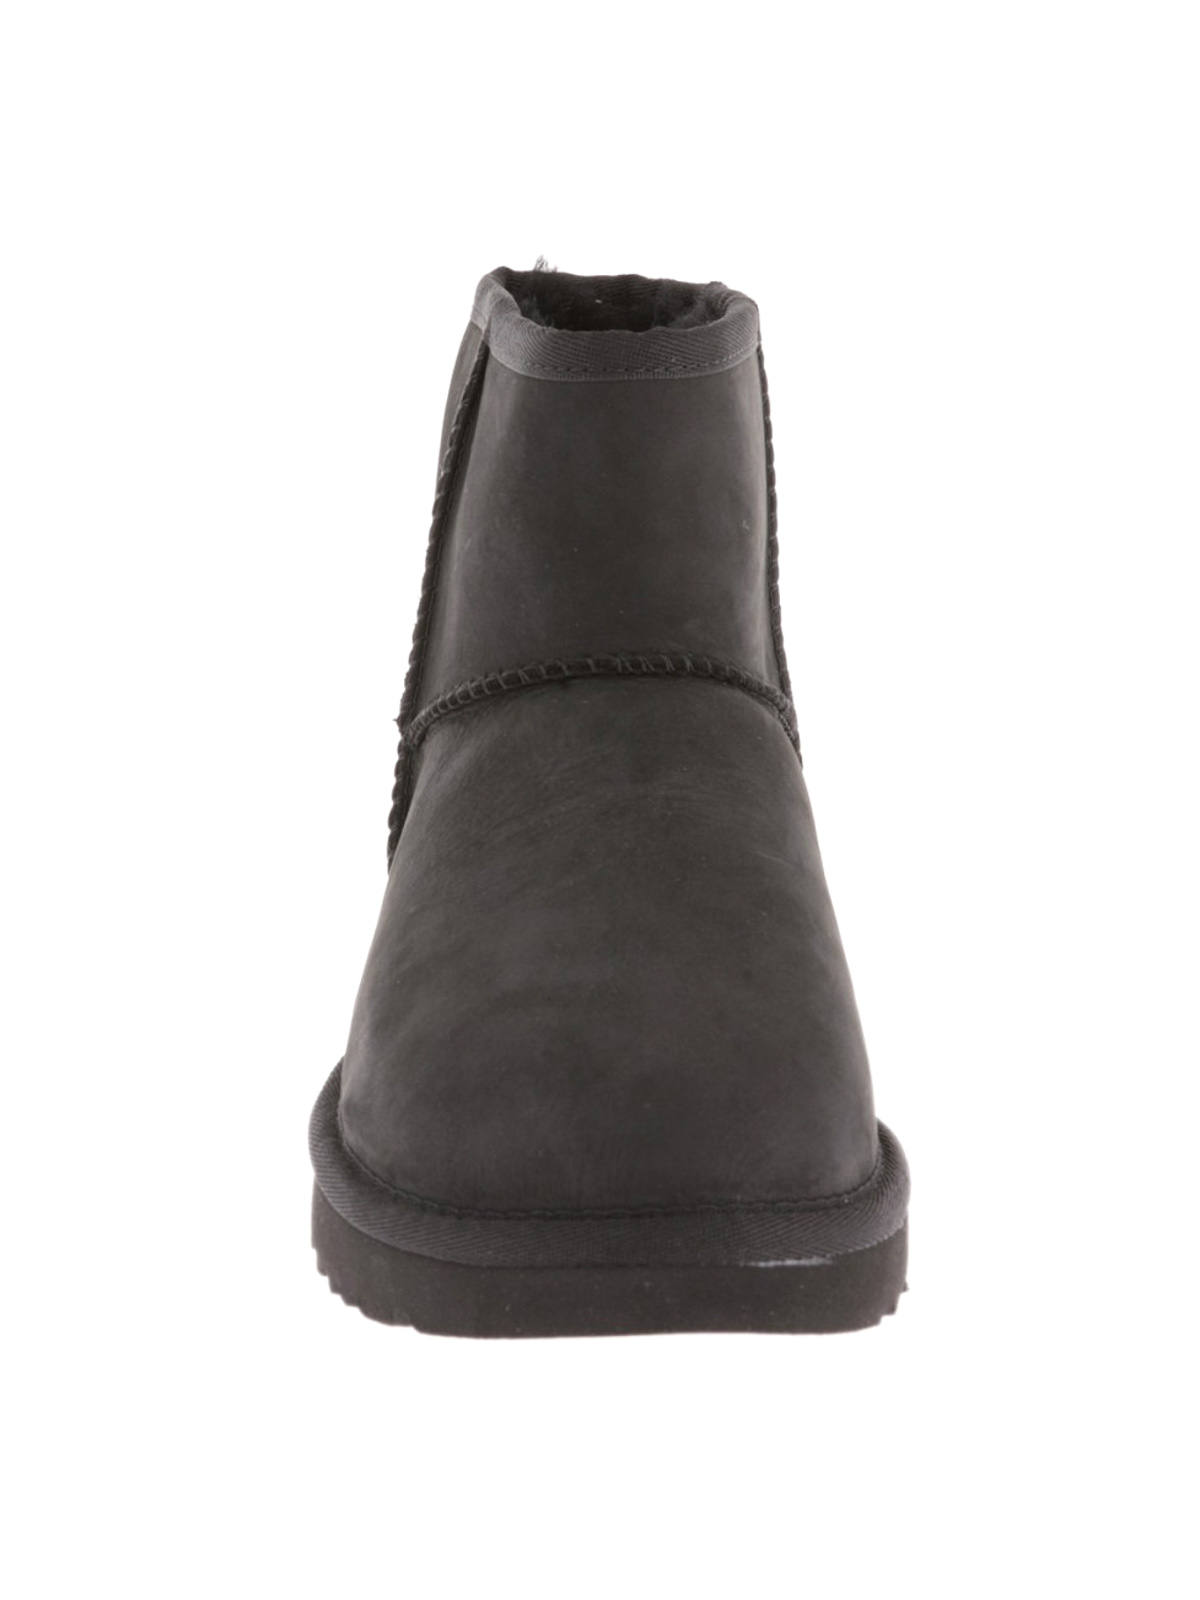 Ugg Classic Mini Leather Boots Black